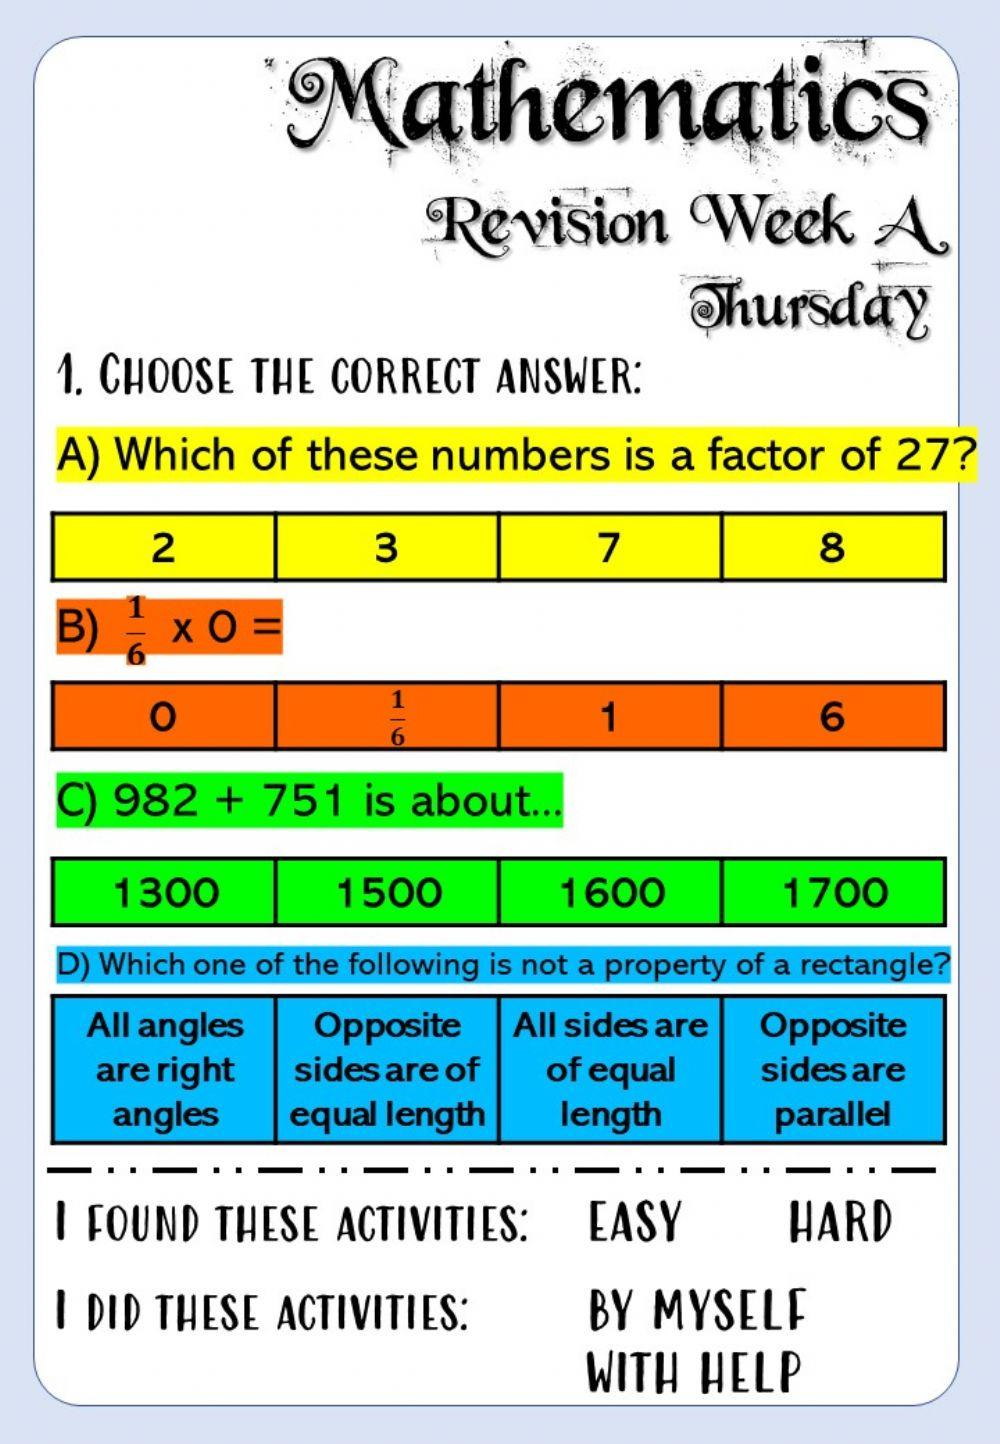 Revision Week A - Math 6 - Thursday